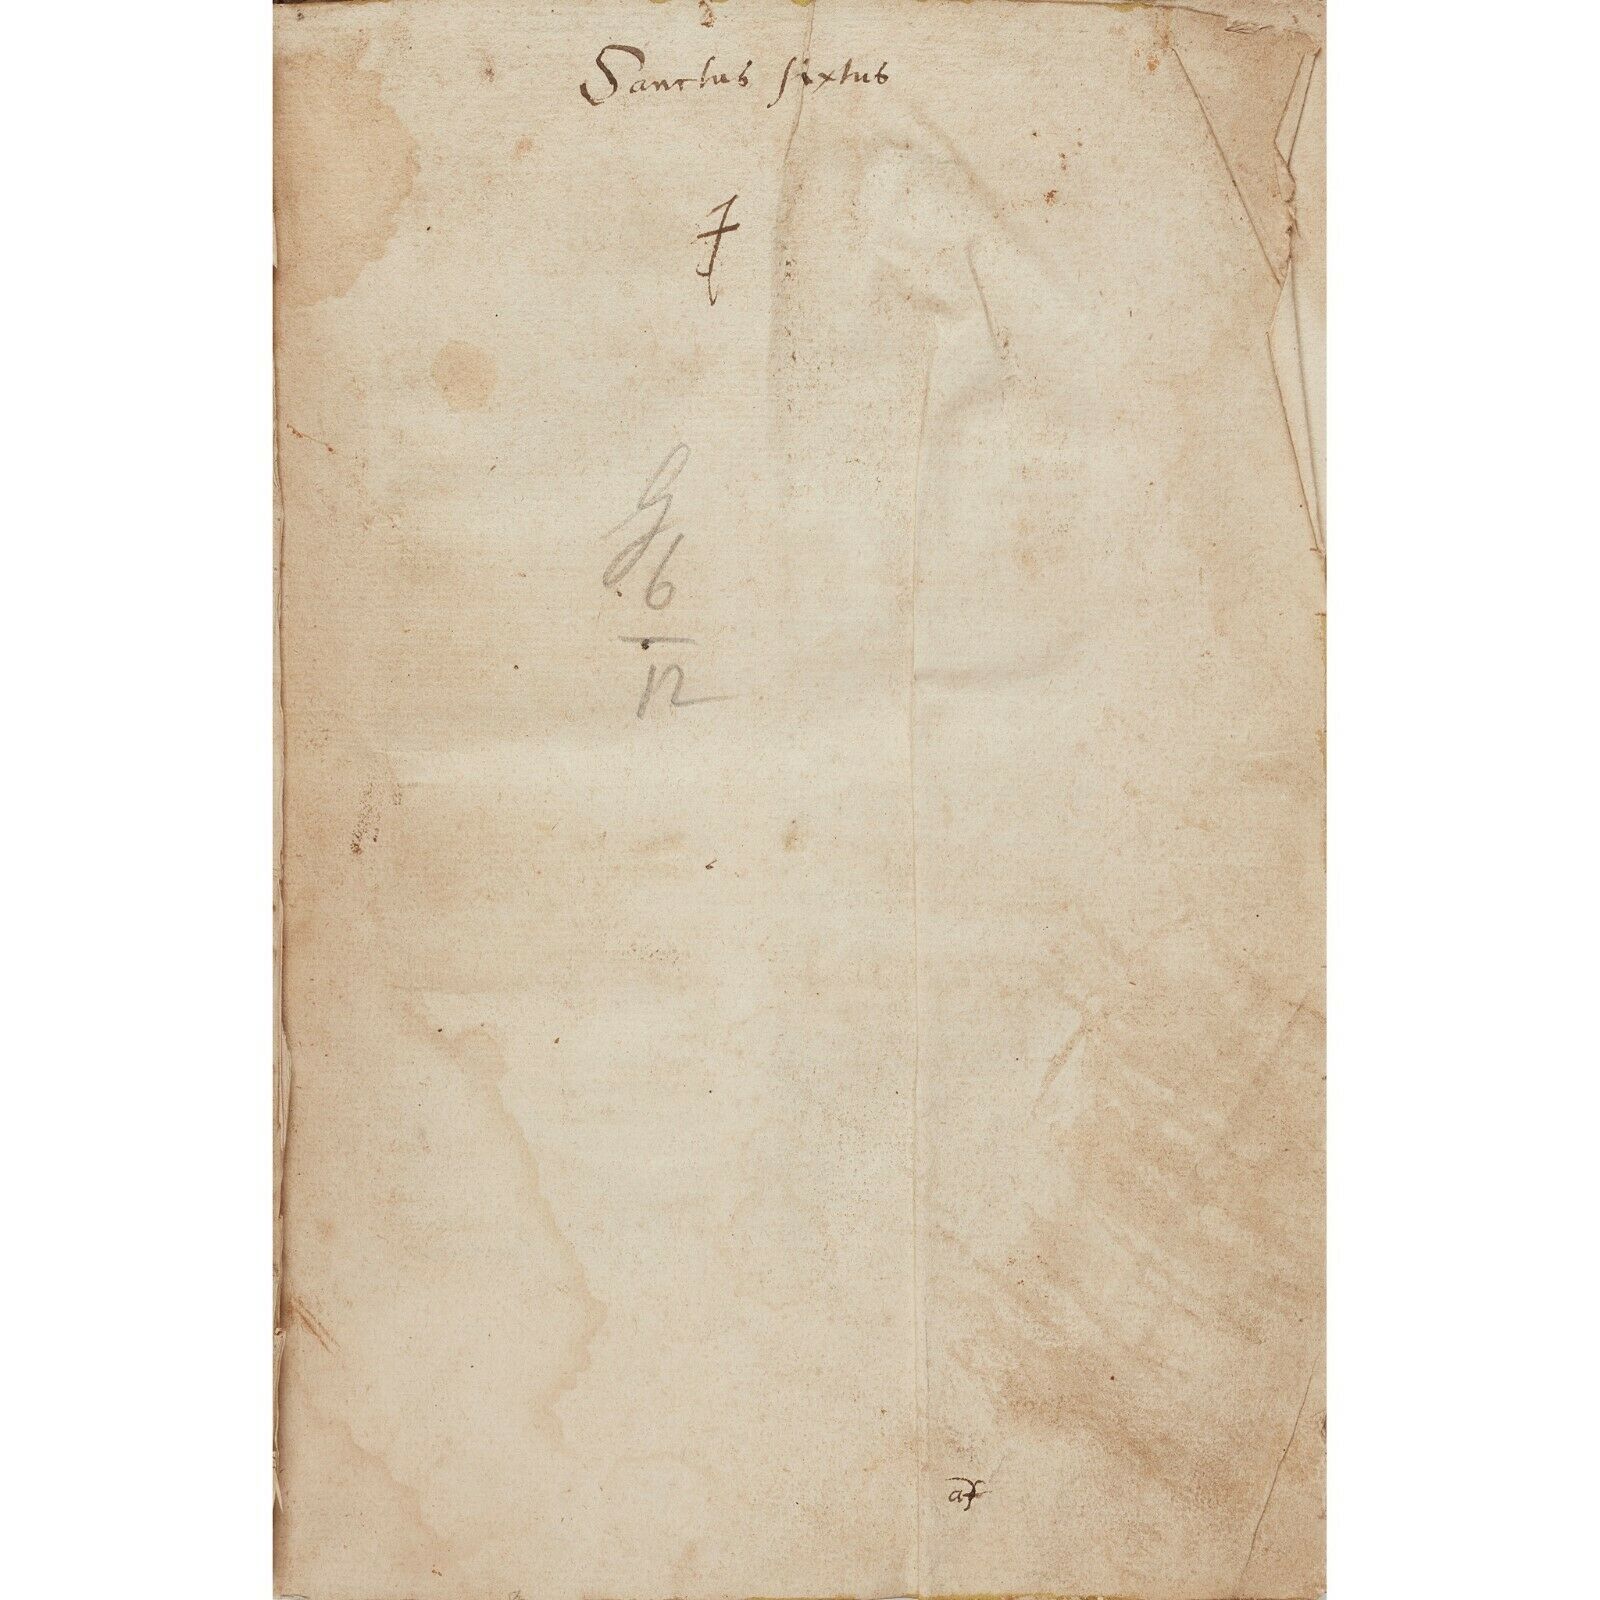 [INCUNABLE] JOHANNES DE TURRECREMATA, EXPOSITIO SUPER TOTO PSALTERIO CIRCA 1482